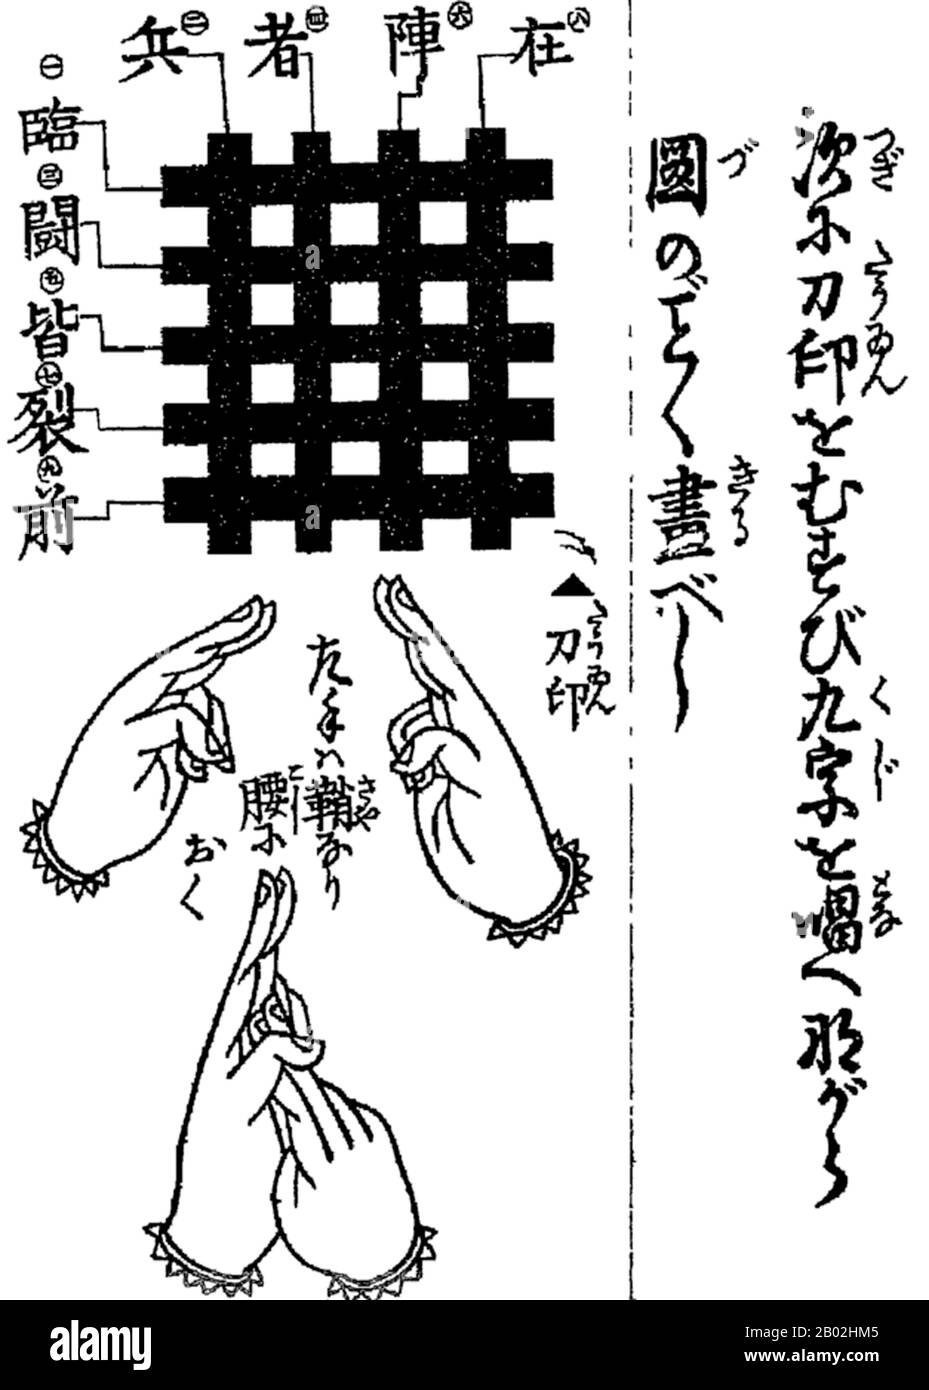 What's the Science Behind Kuji Kiri (aka. Ninja Hand Signs)?